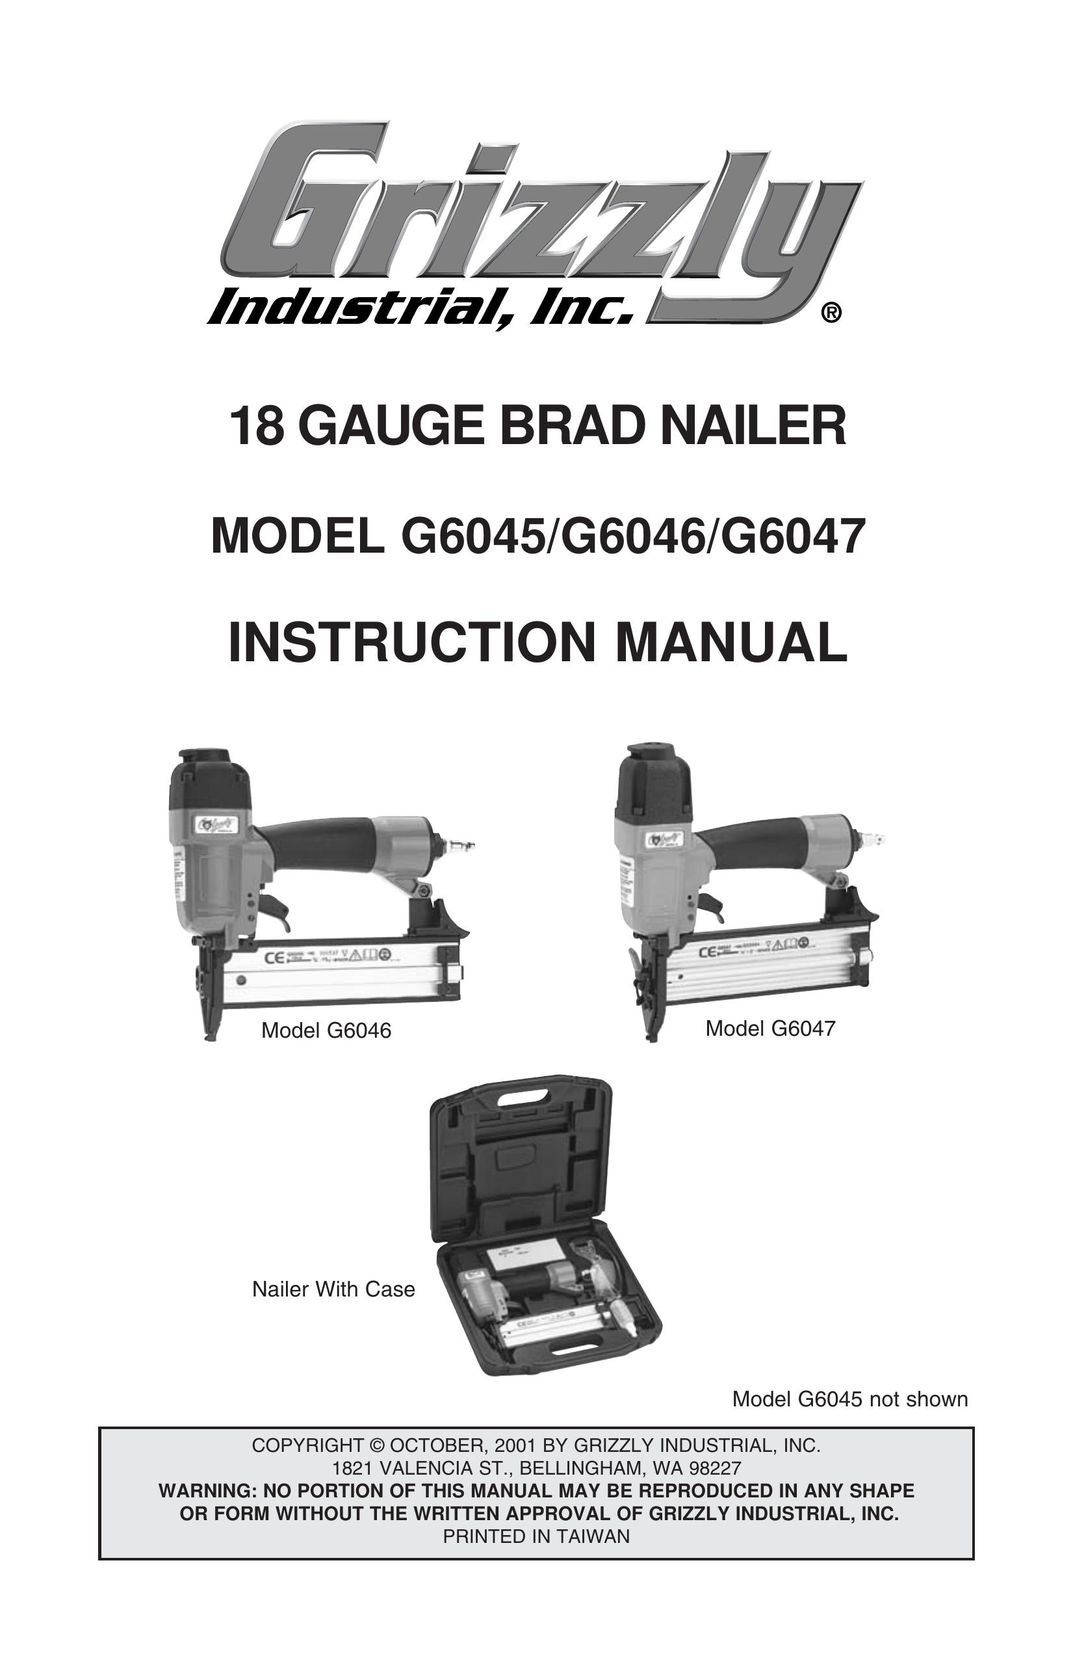 Grizzly G6047 Nail Gun User Manual